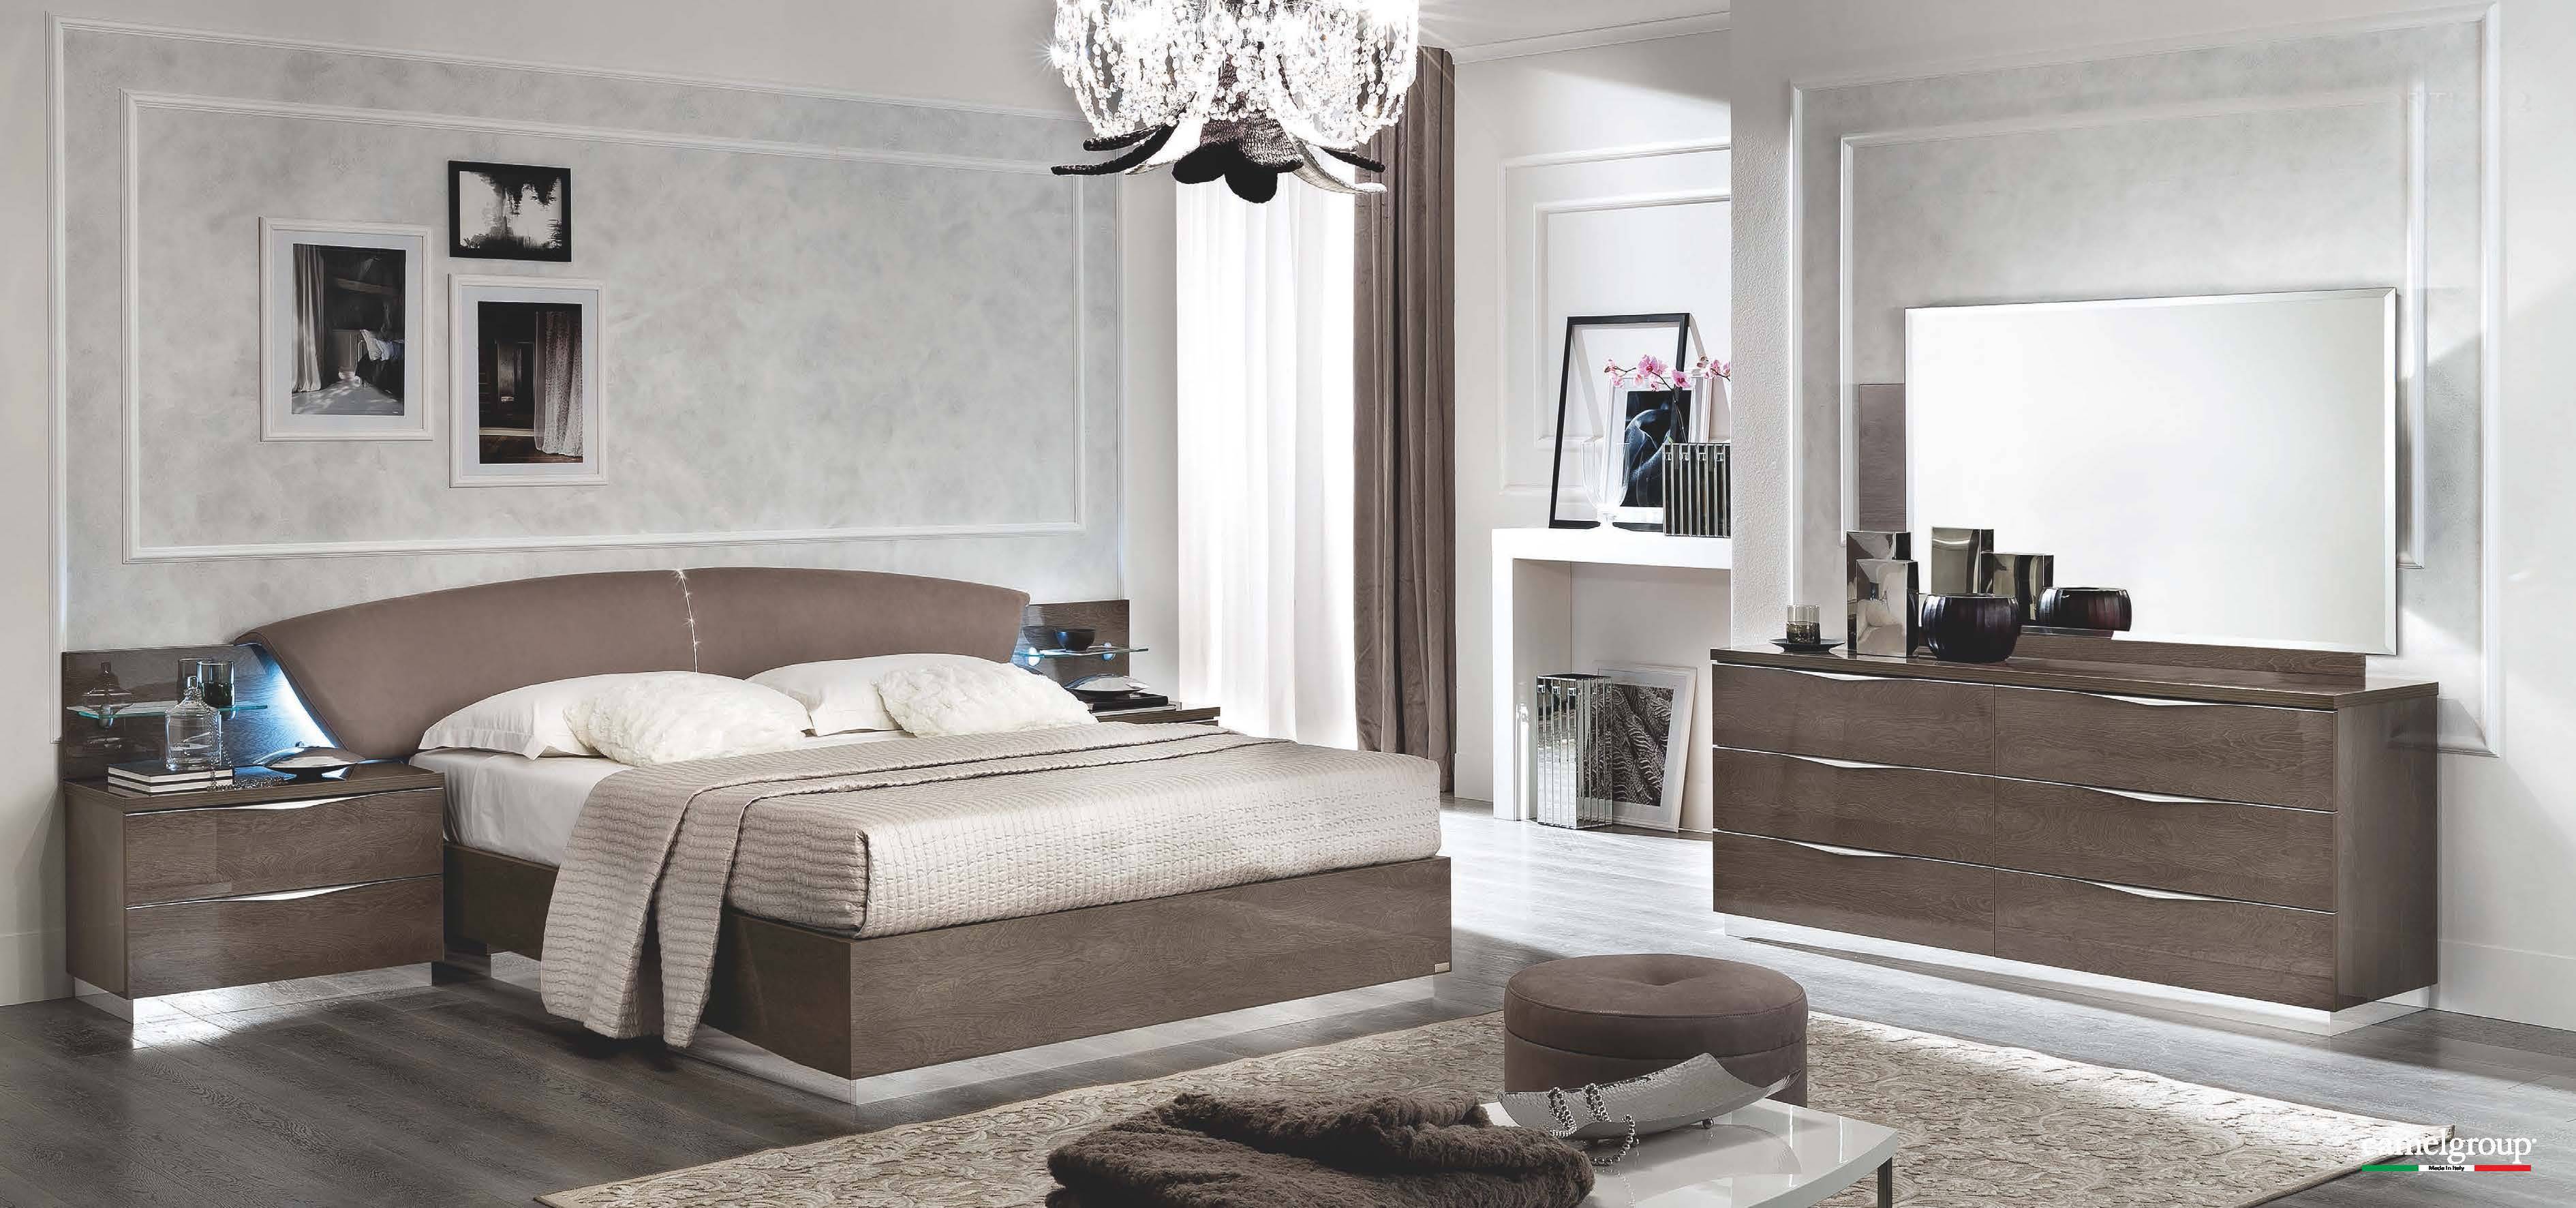 italian bedroom furniture - Nathalifeofart